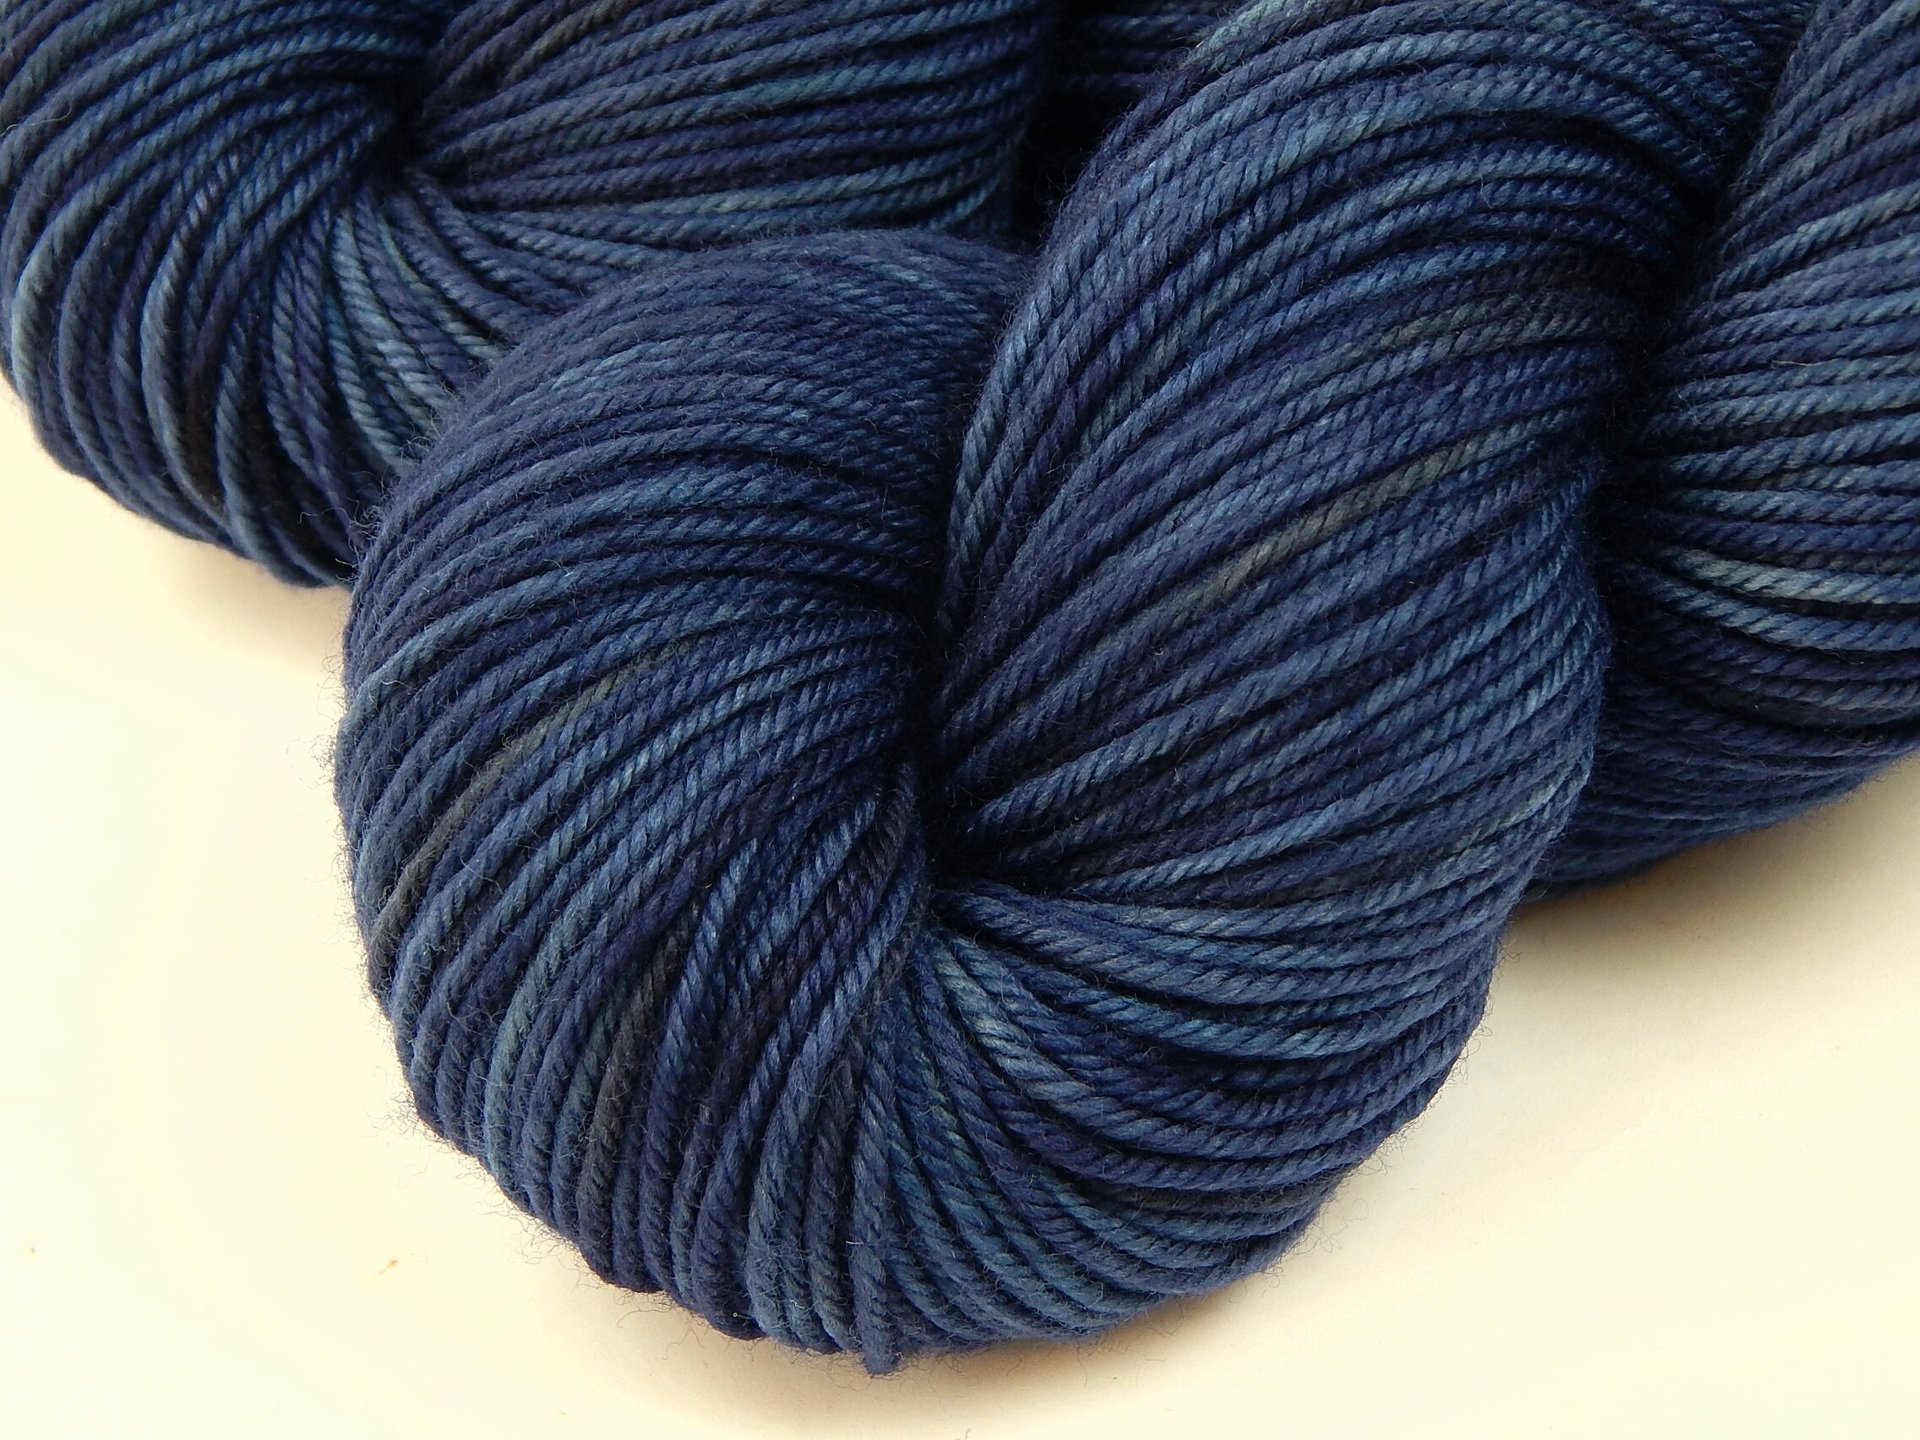 Hand Dyed Yarn, DK Weight Superwash Merino Wool - Ink Tonal - Soft Washable Navy Blue Indie Dyed Yarn, Wool Yarn for Knitting Crochet